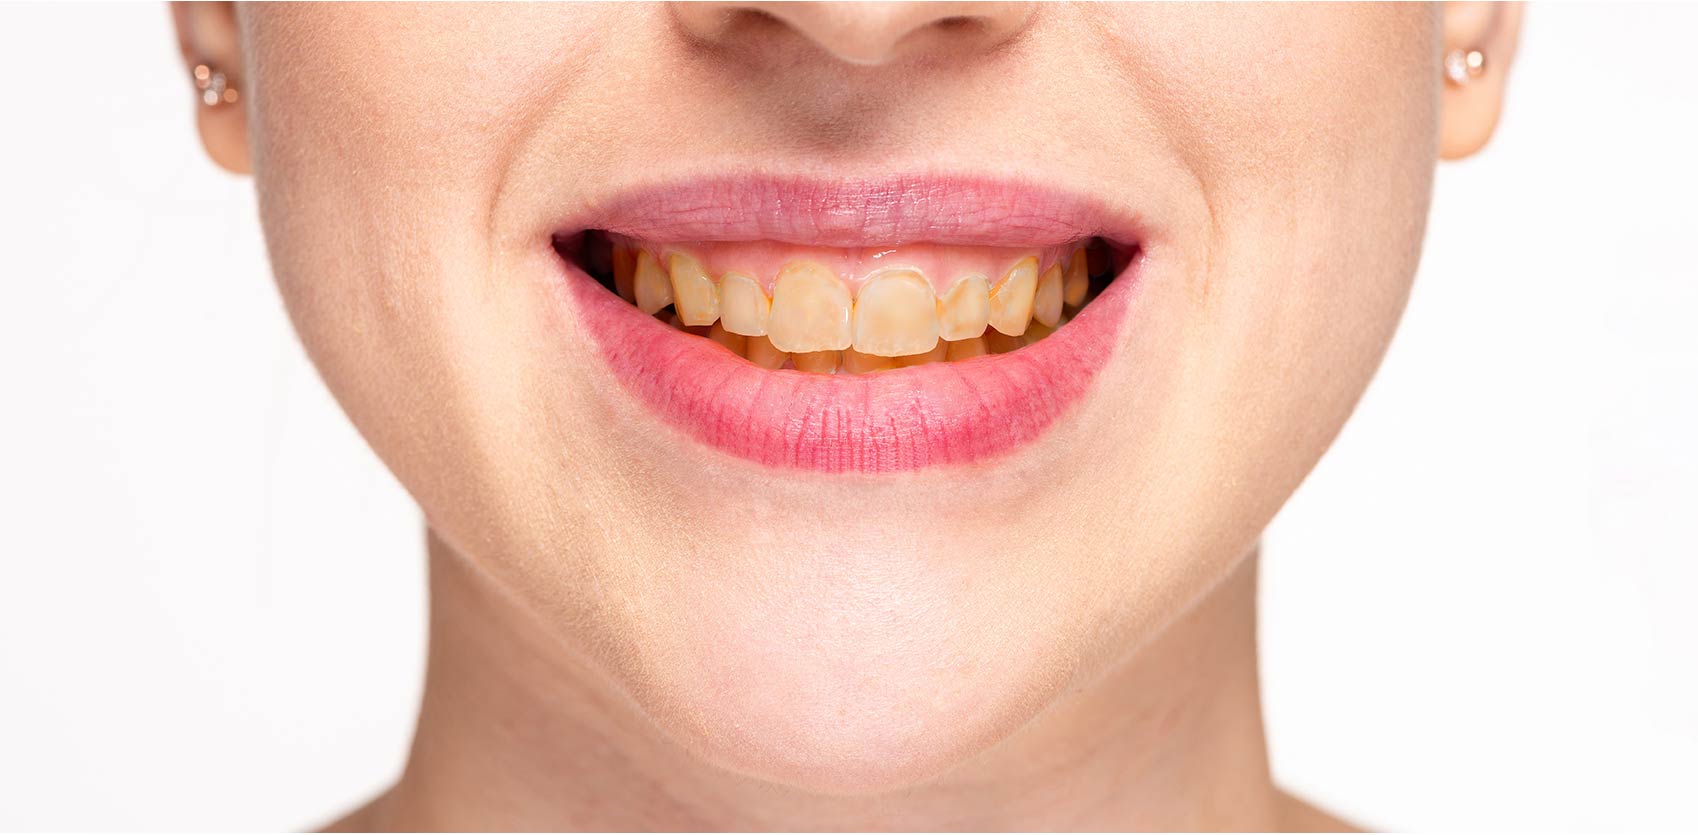 teeth-whitening-before